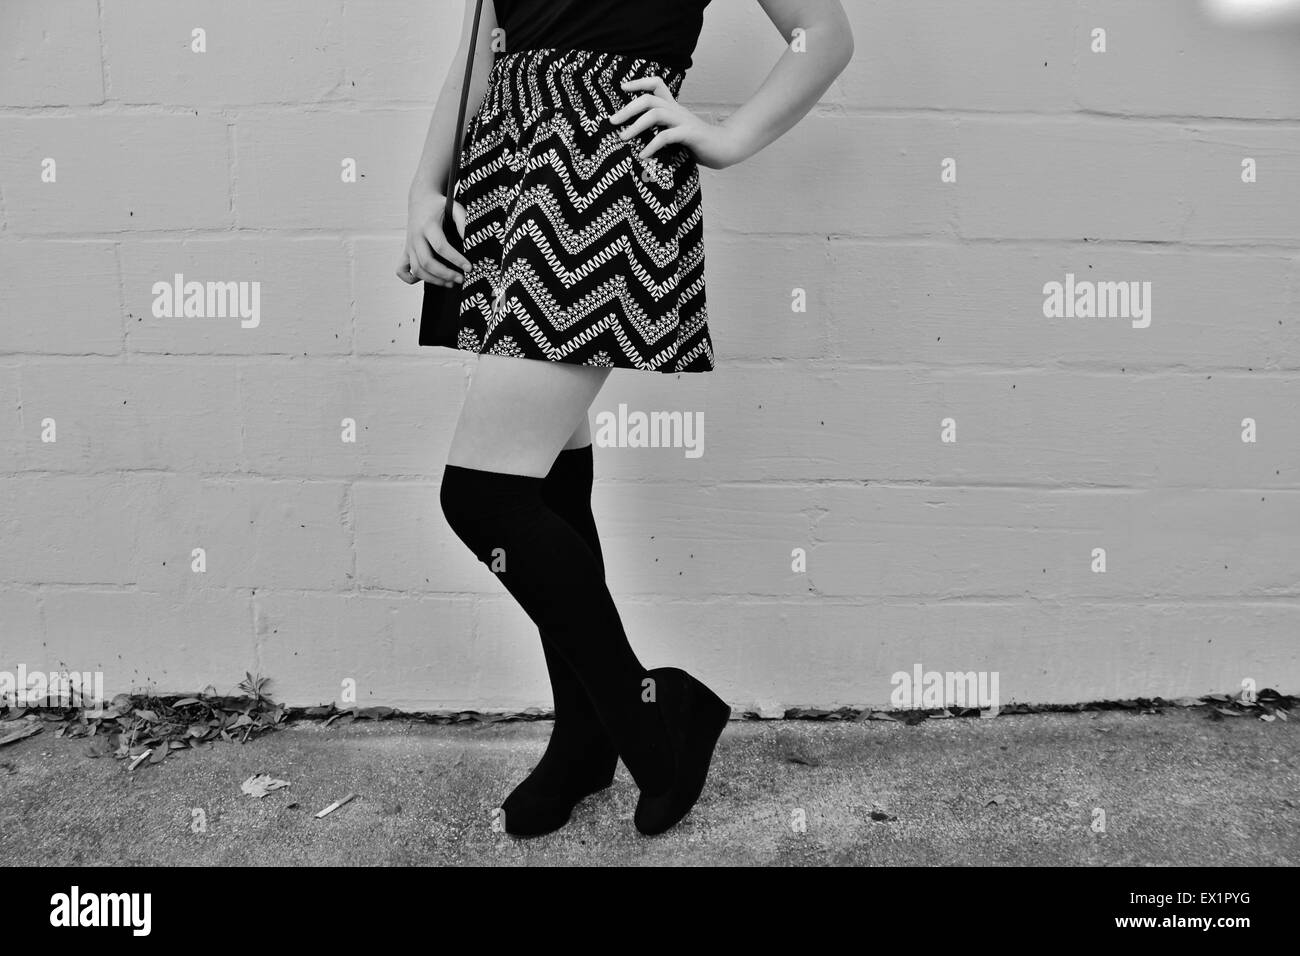 Posing in an alleyway. Stock Photo